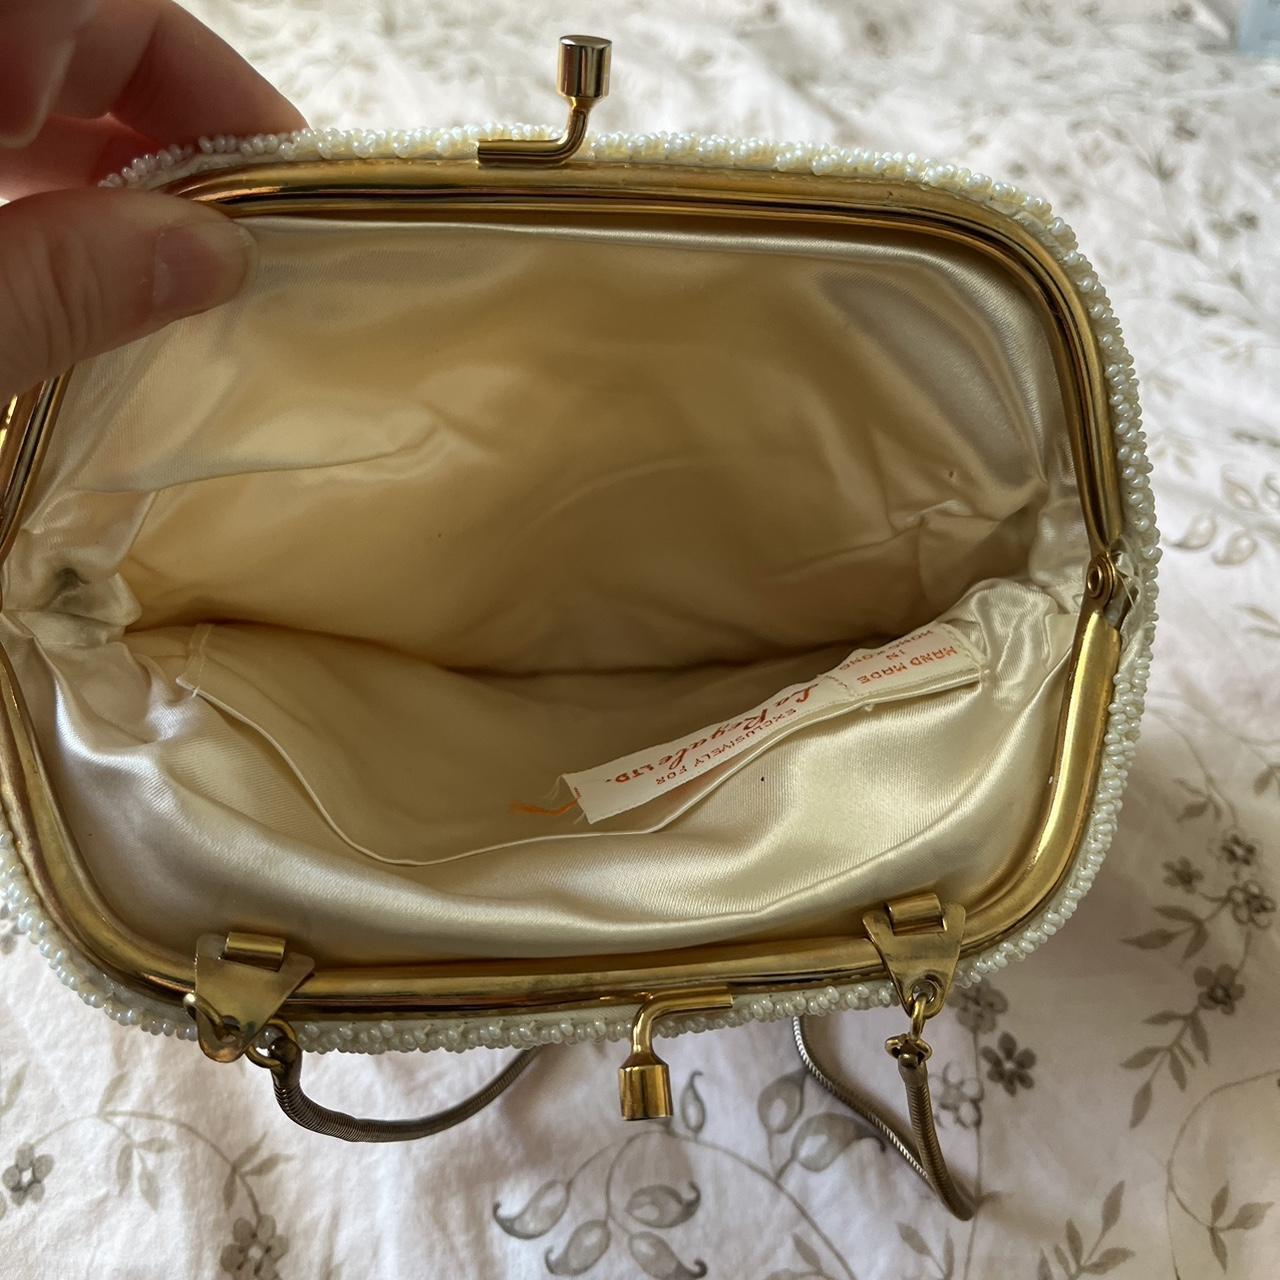 Vintage Brown and Gold La Regale Ltd. Handbag